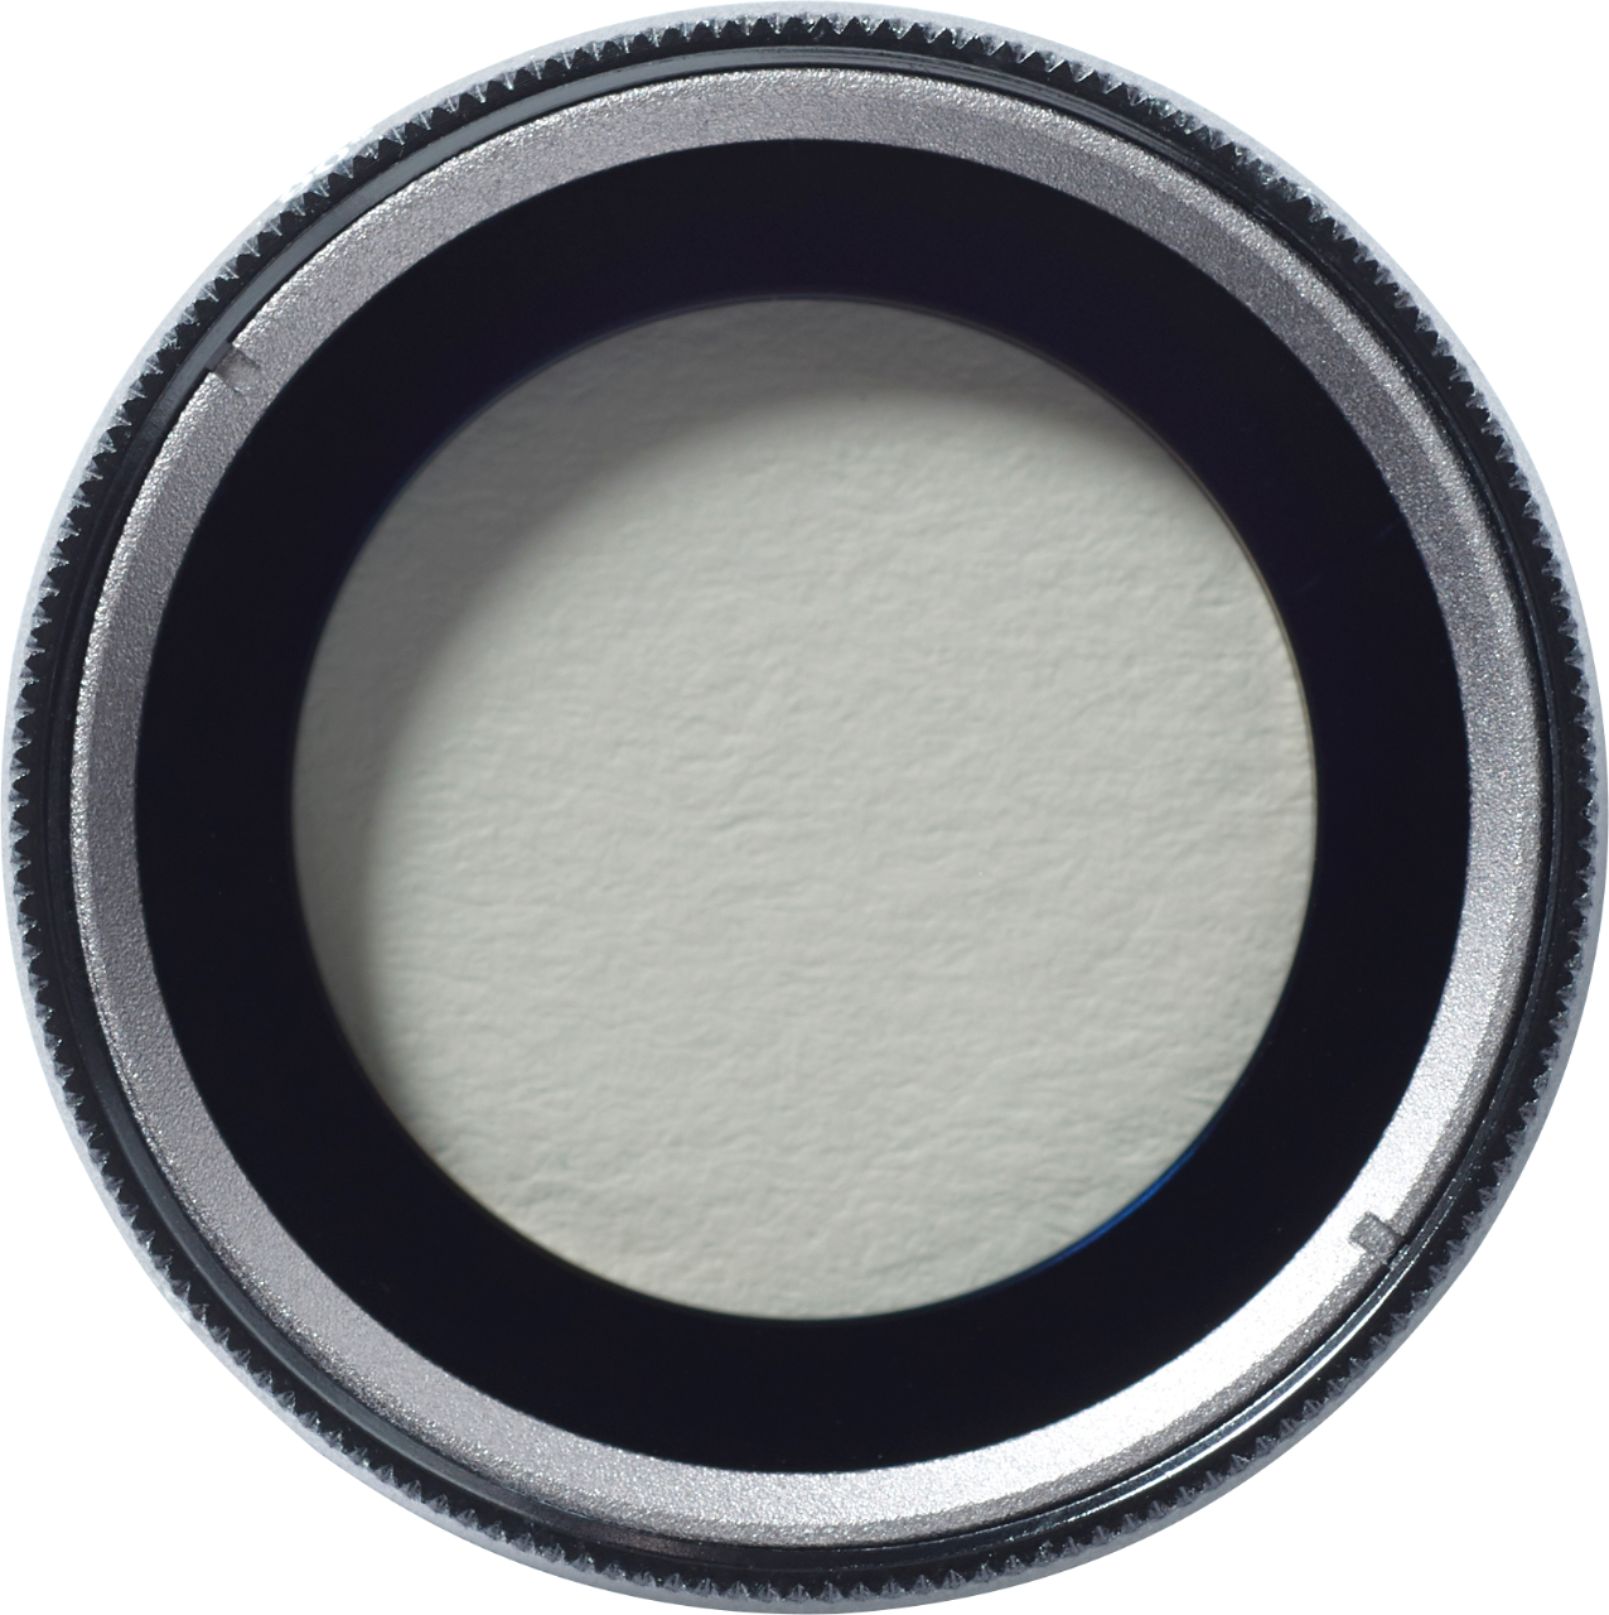 Nextbase - Polarizing Lens Filter